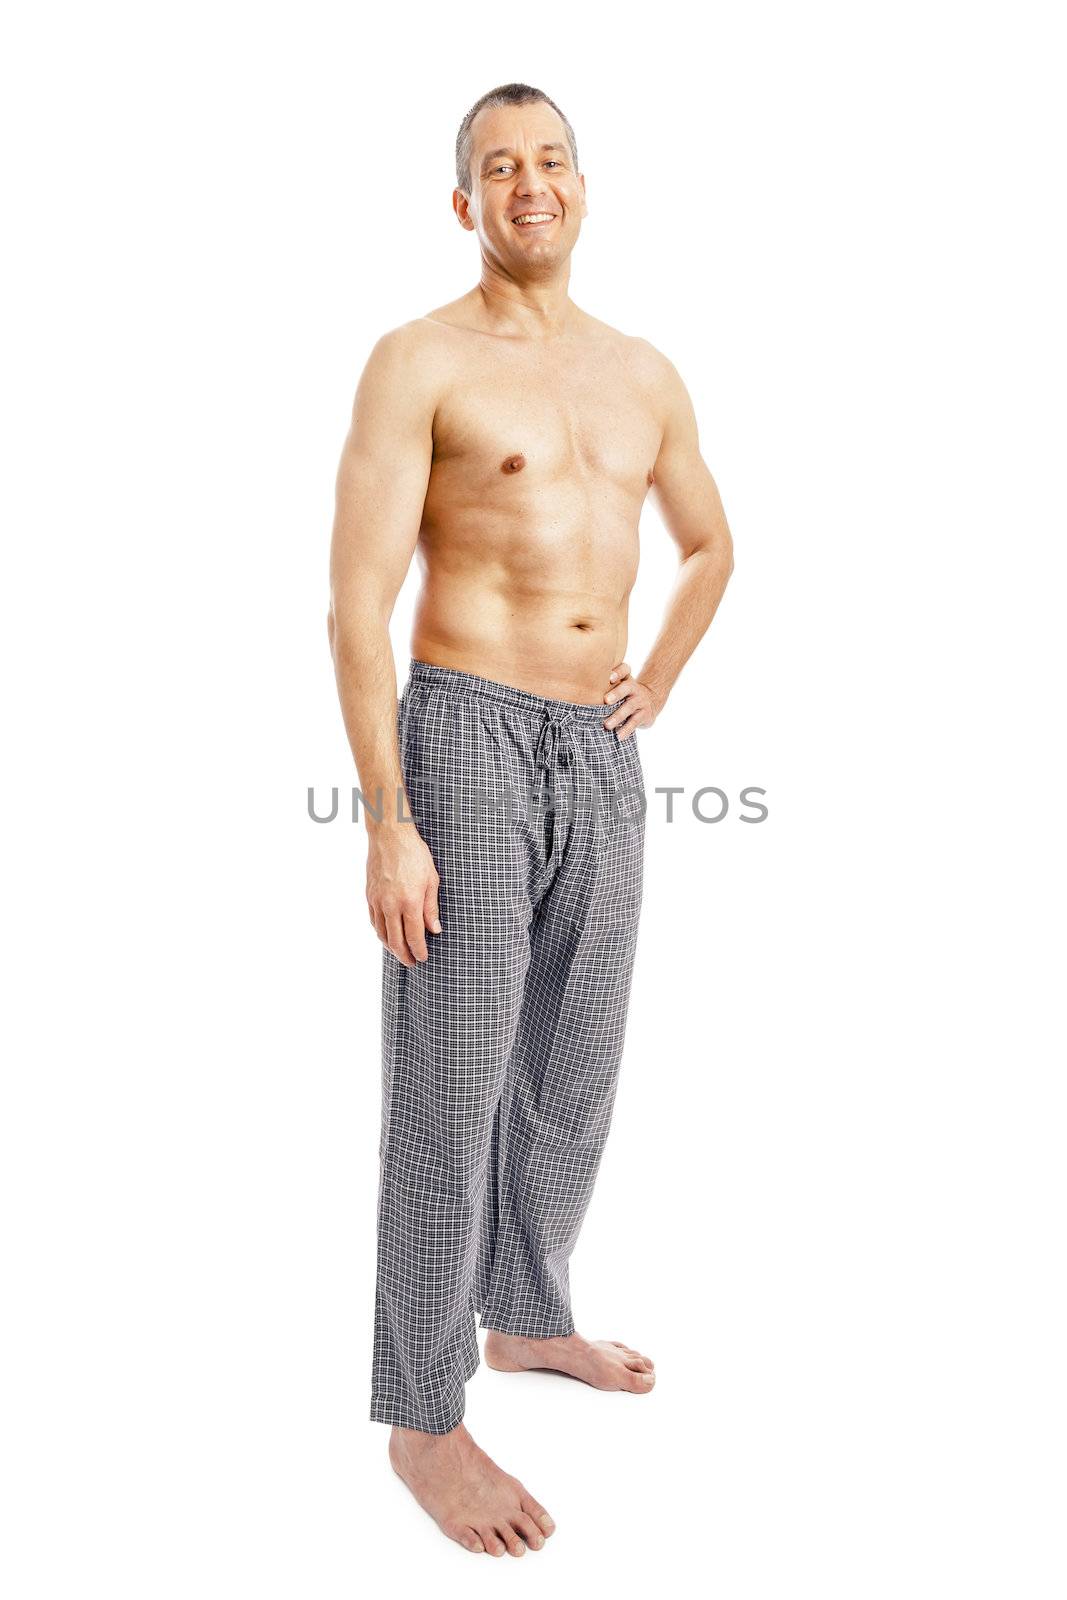 An image of a nice man in pajamas